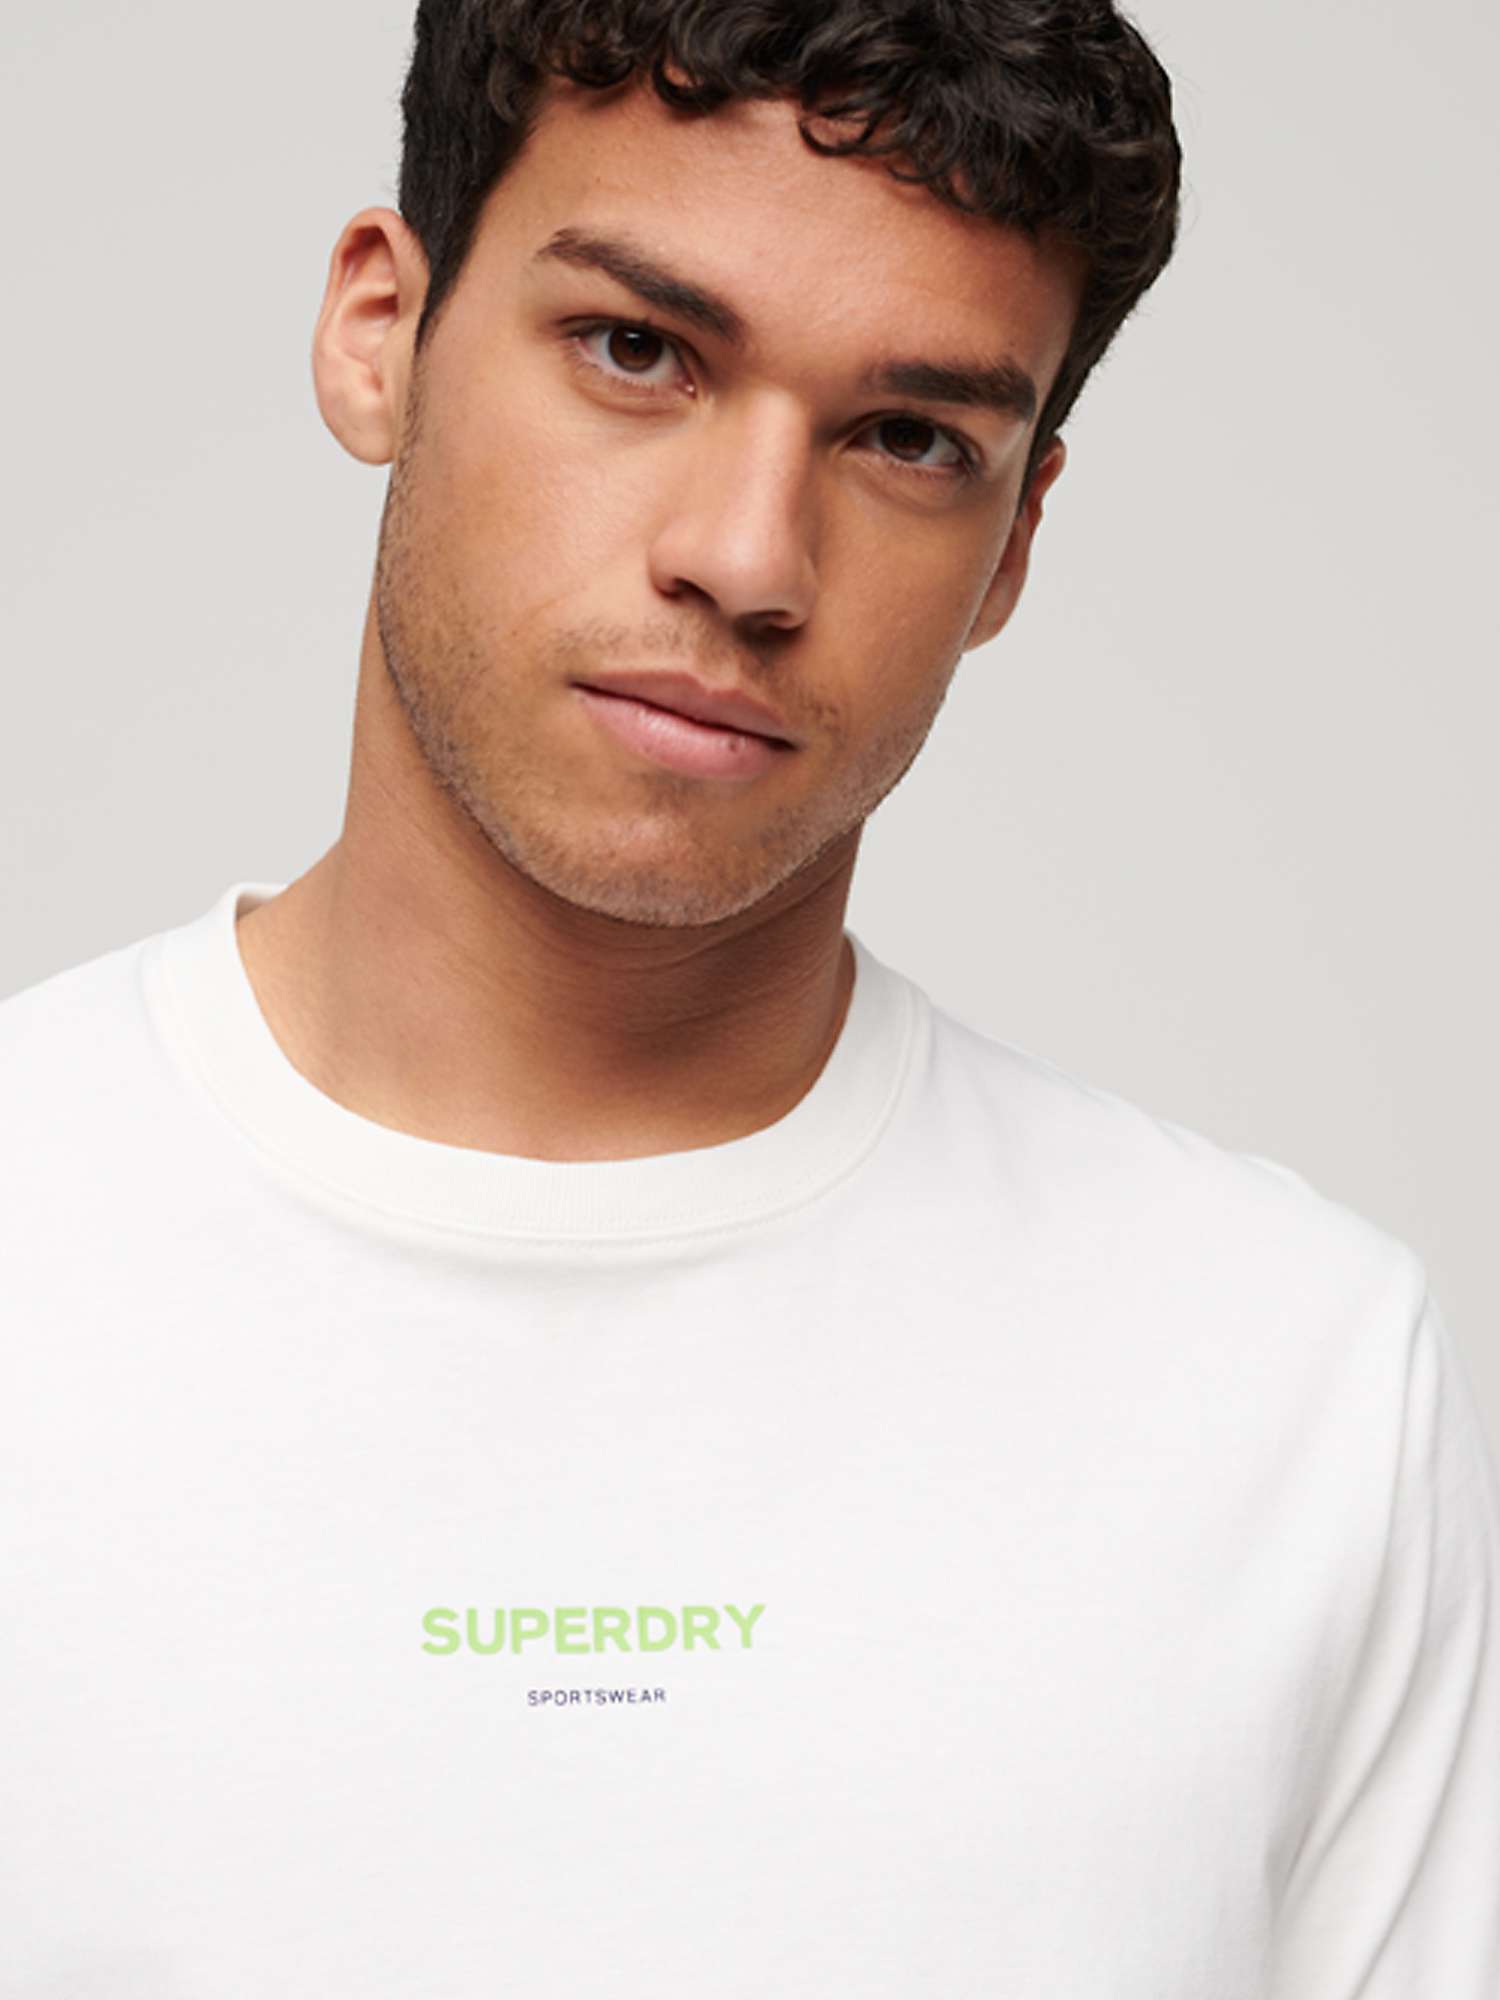 Buy Superdry Sportswear T-Shirt, Brilliant White Online at johnlewis.com